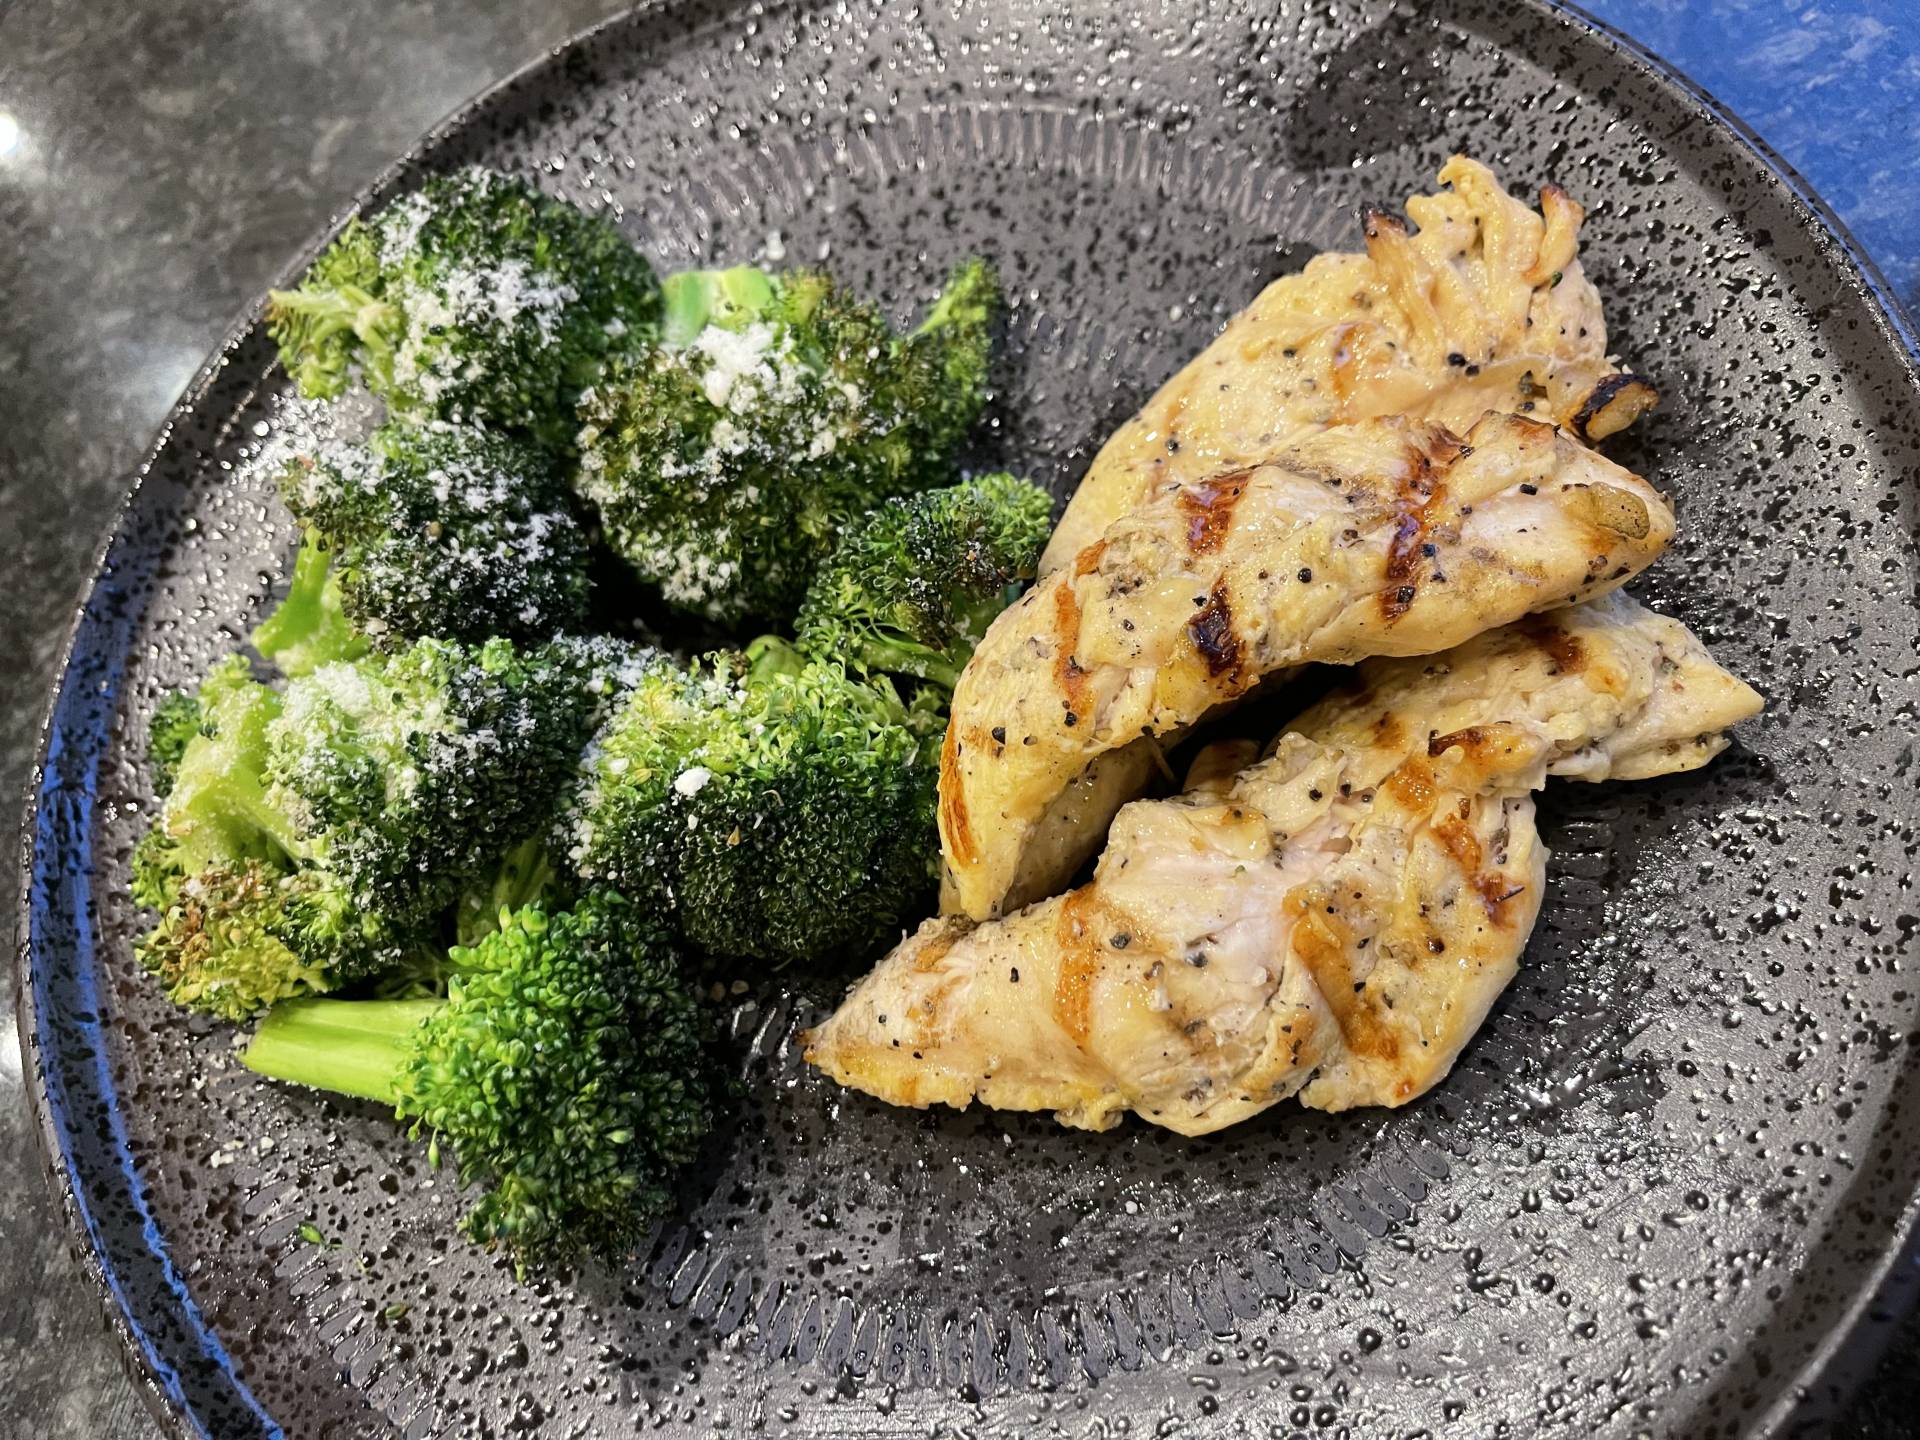 Lemon Pepper Chicken and Garlic Parmesan Broccoli